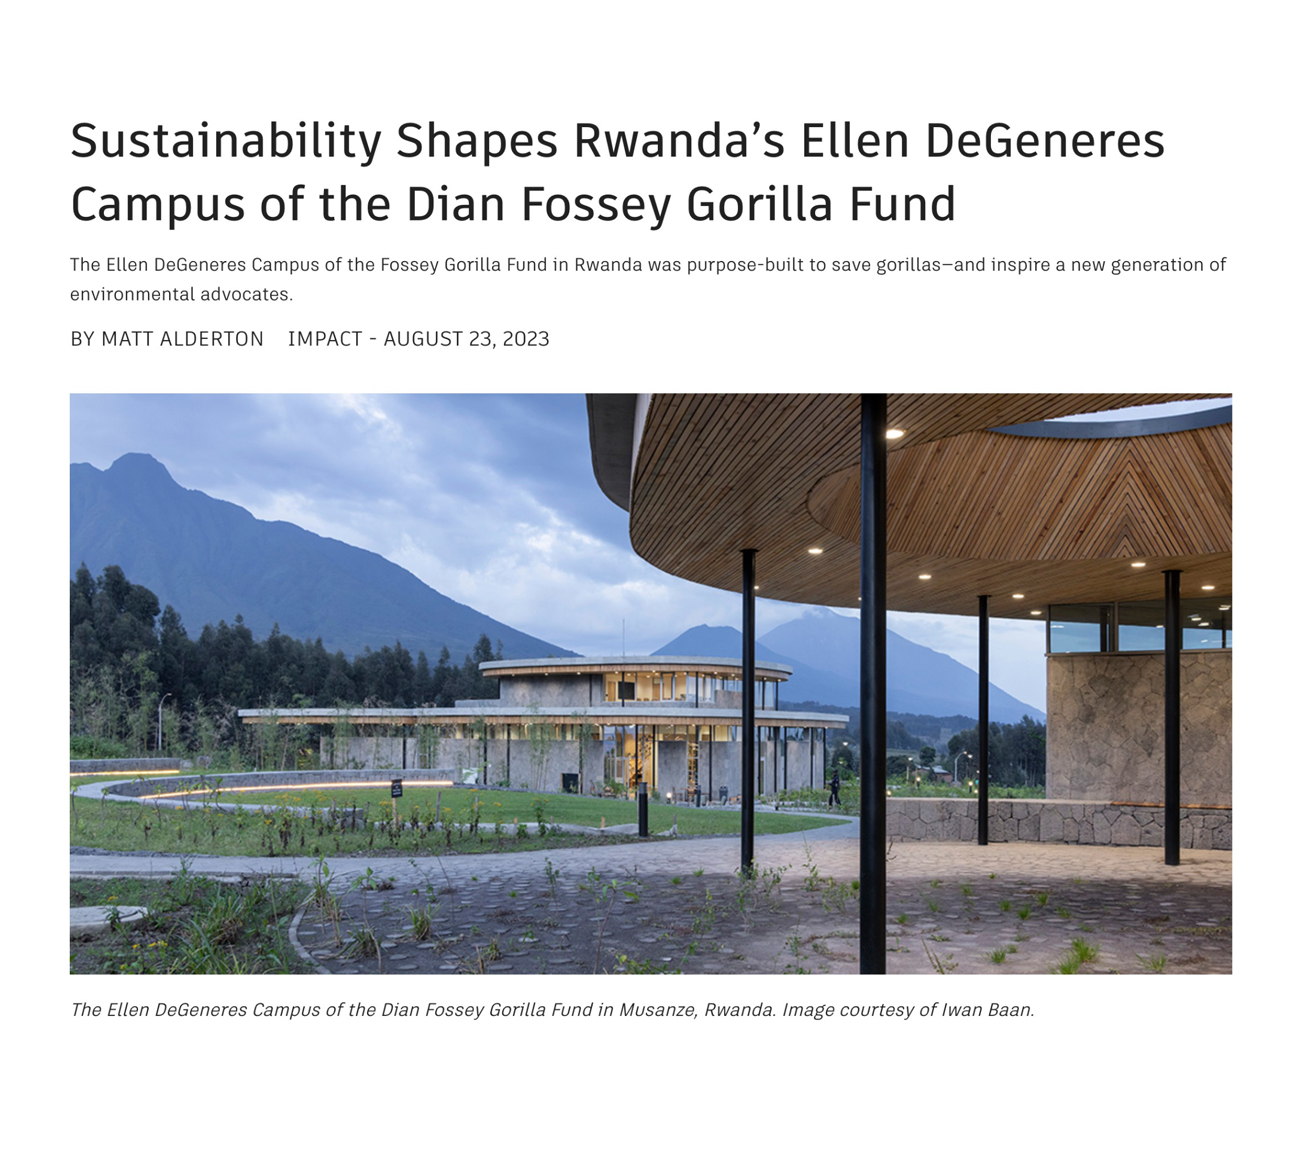 Design & Make by Autodesk: "Sustainability Shapes Rwanda's Ellen Degeneres Campus of the Dian Fossey Gorilla Fund"